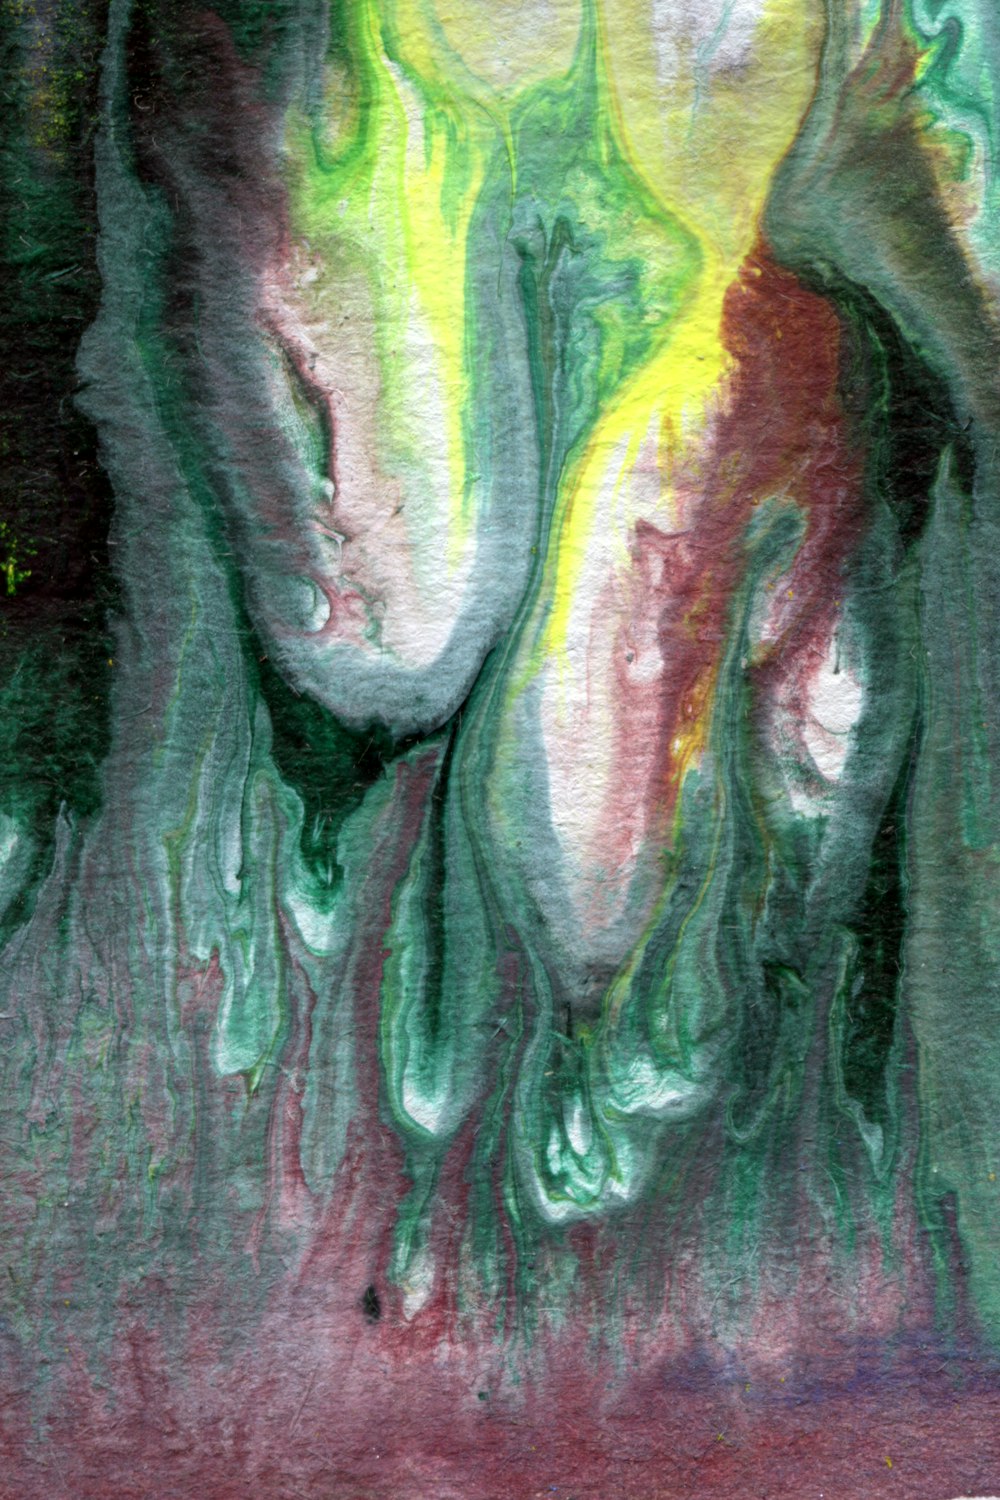 pittura astratta viola verde e rossa